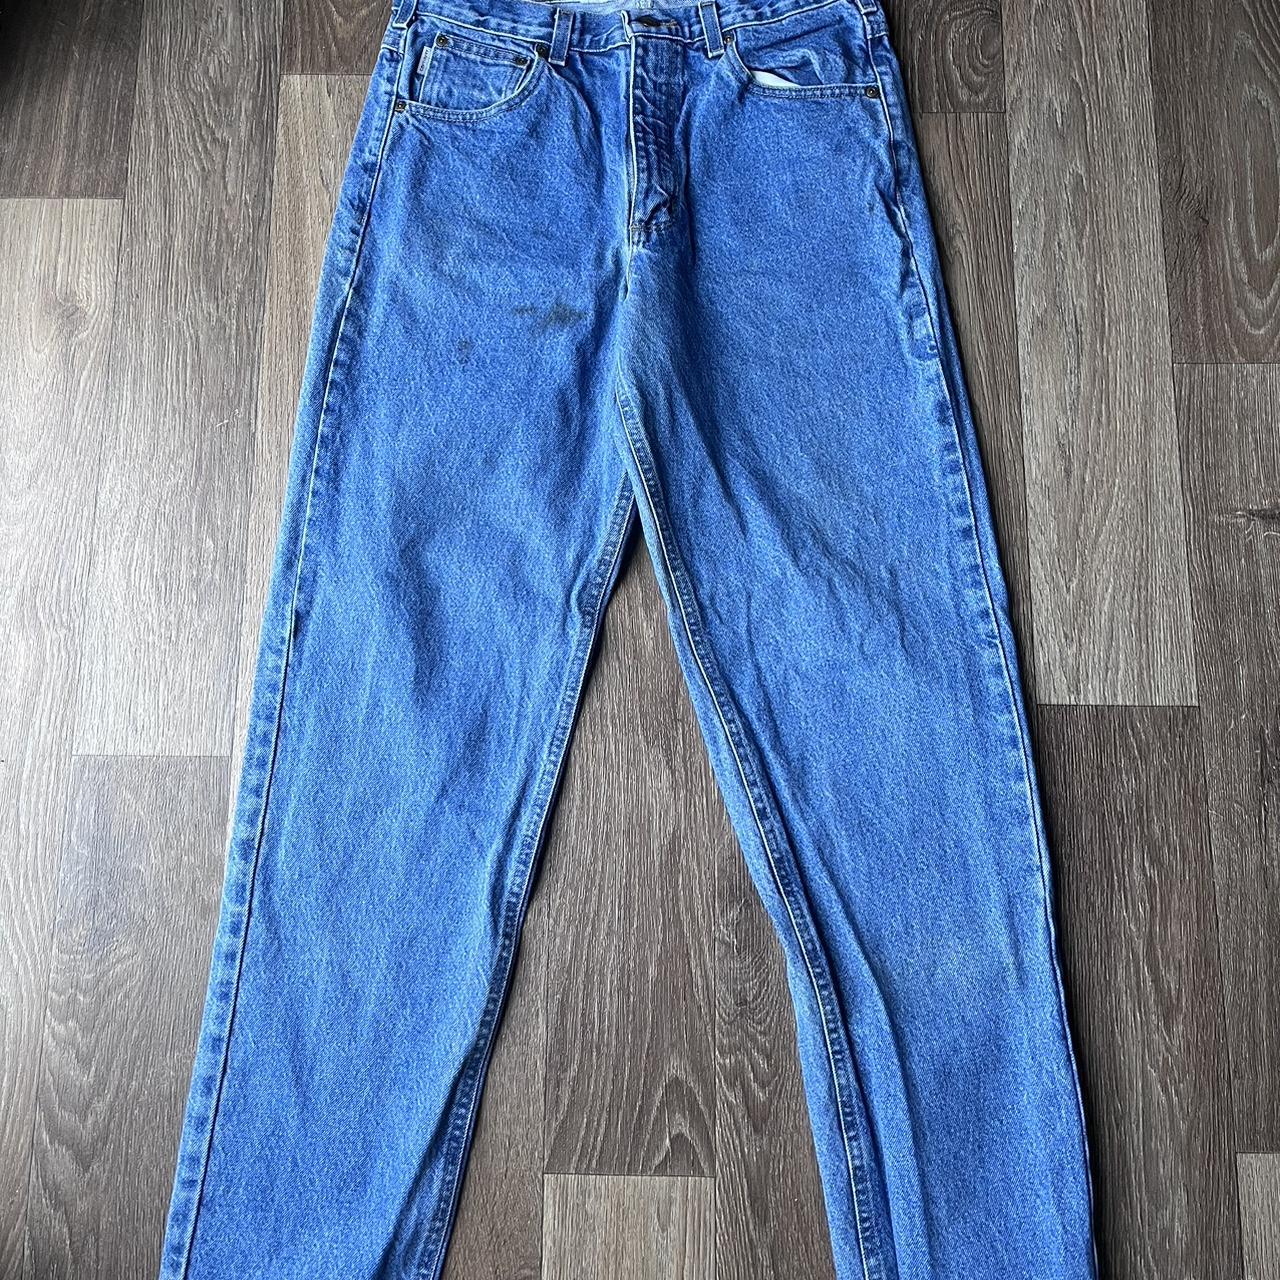 Carhartt Men's Blue Jeans | Depop